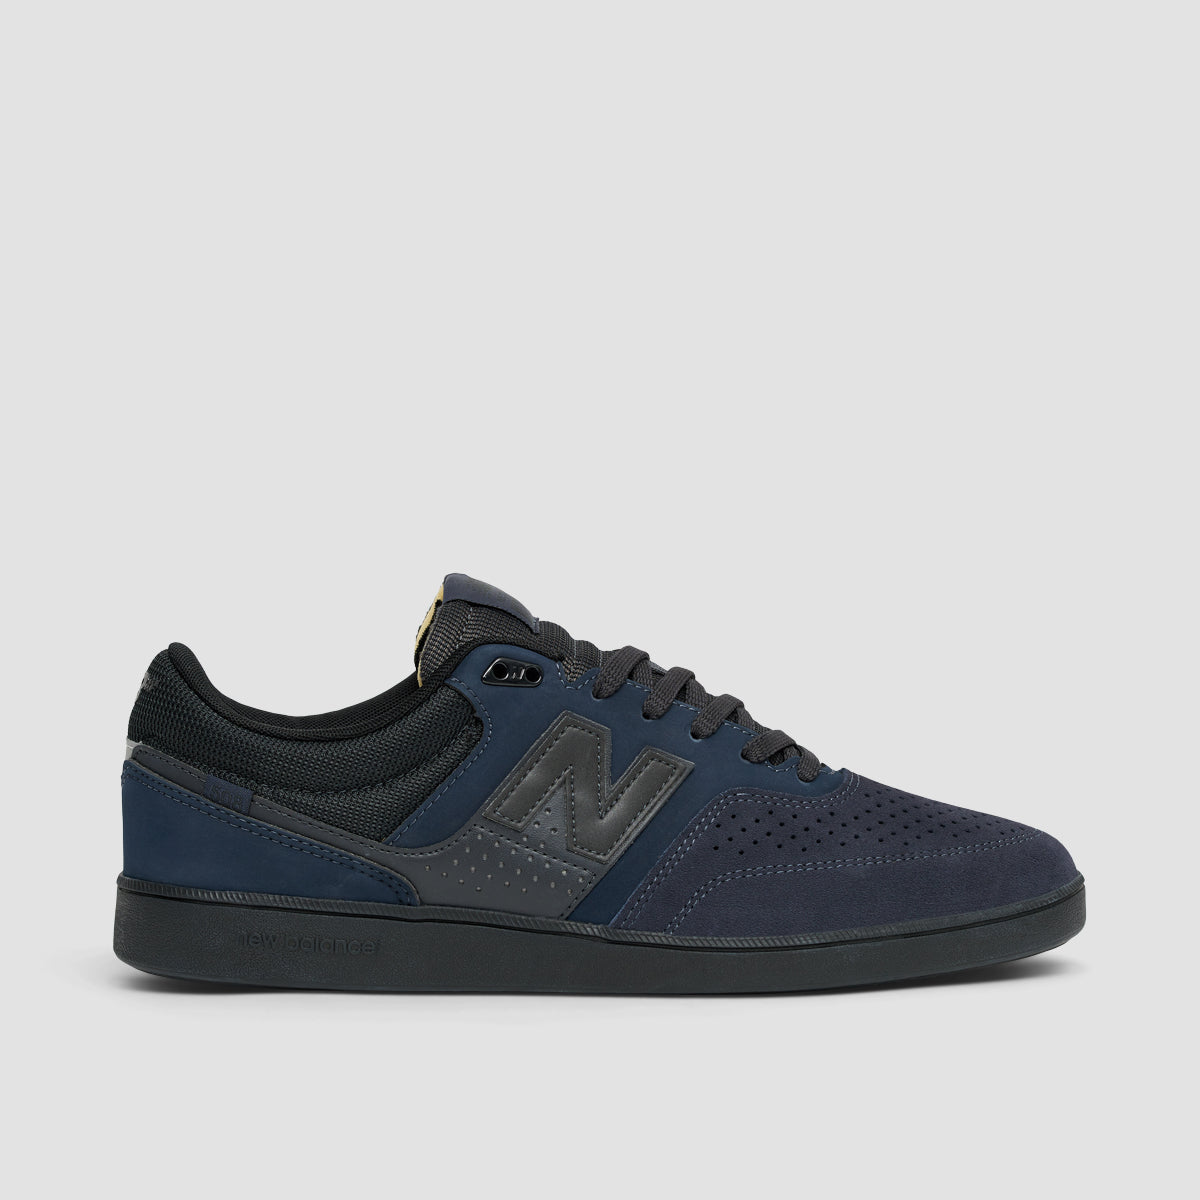 New Balance Numeric Brandon Westgate 508 Shoes - Navy/Black